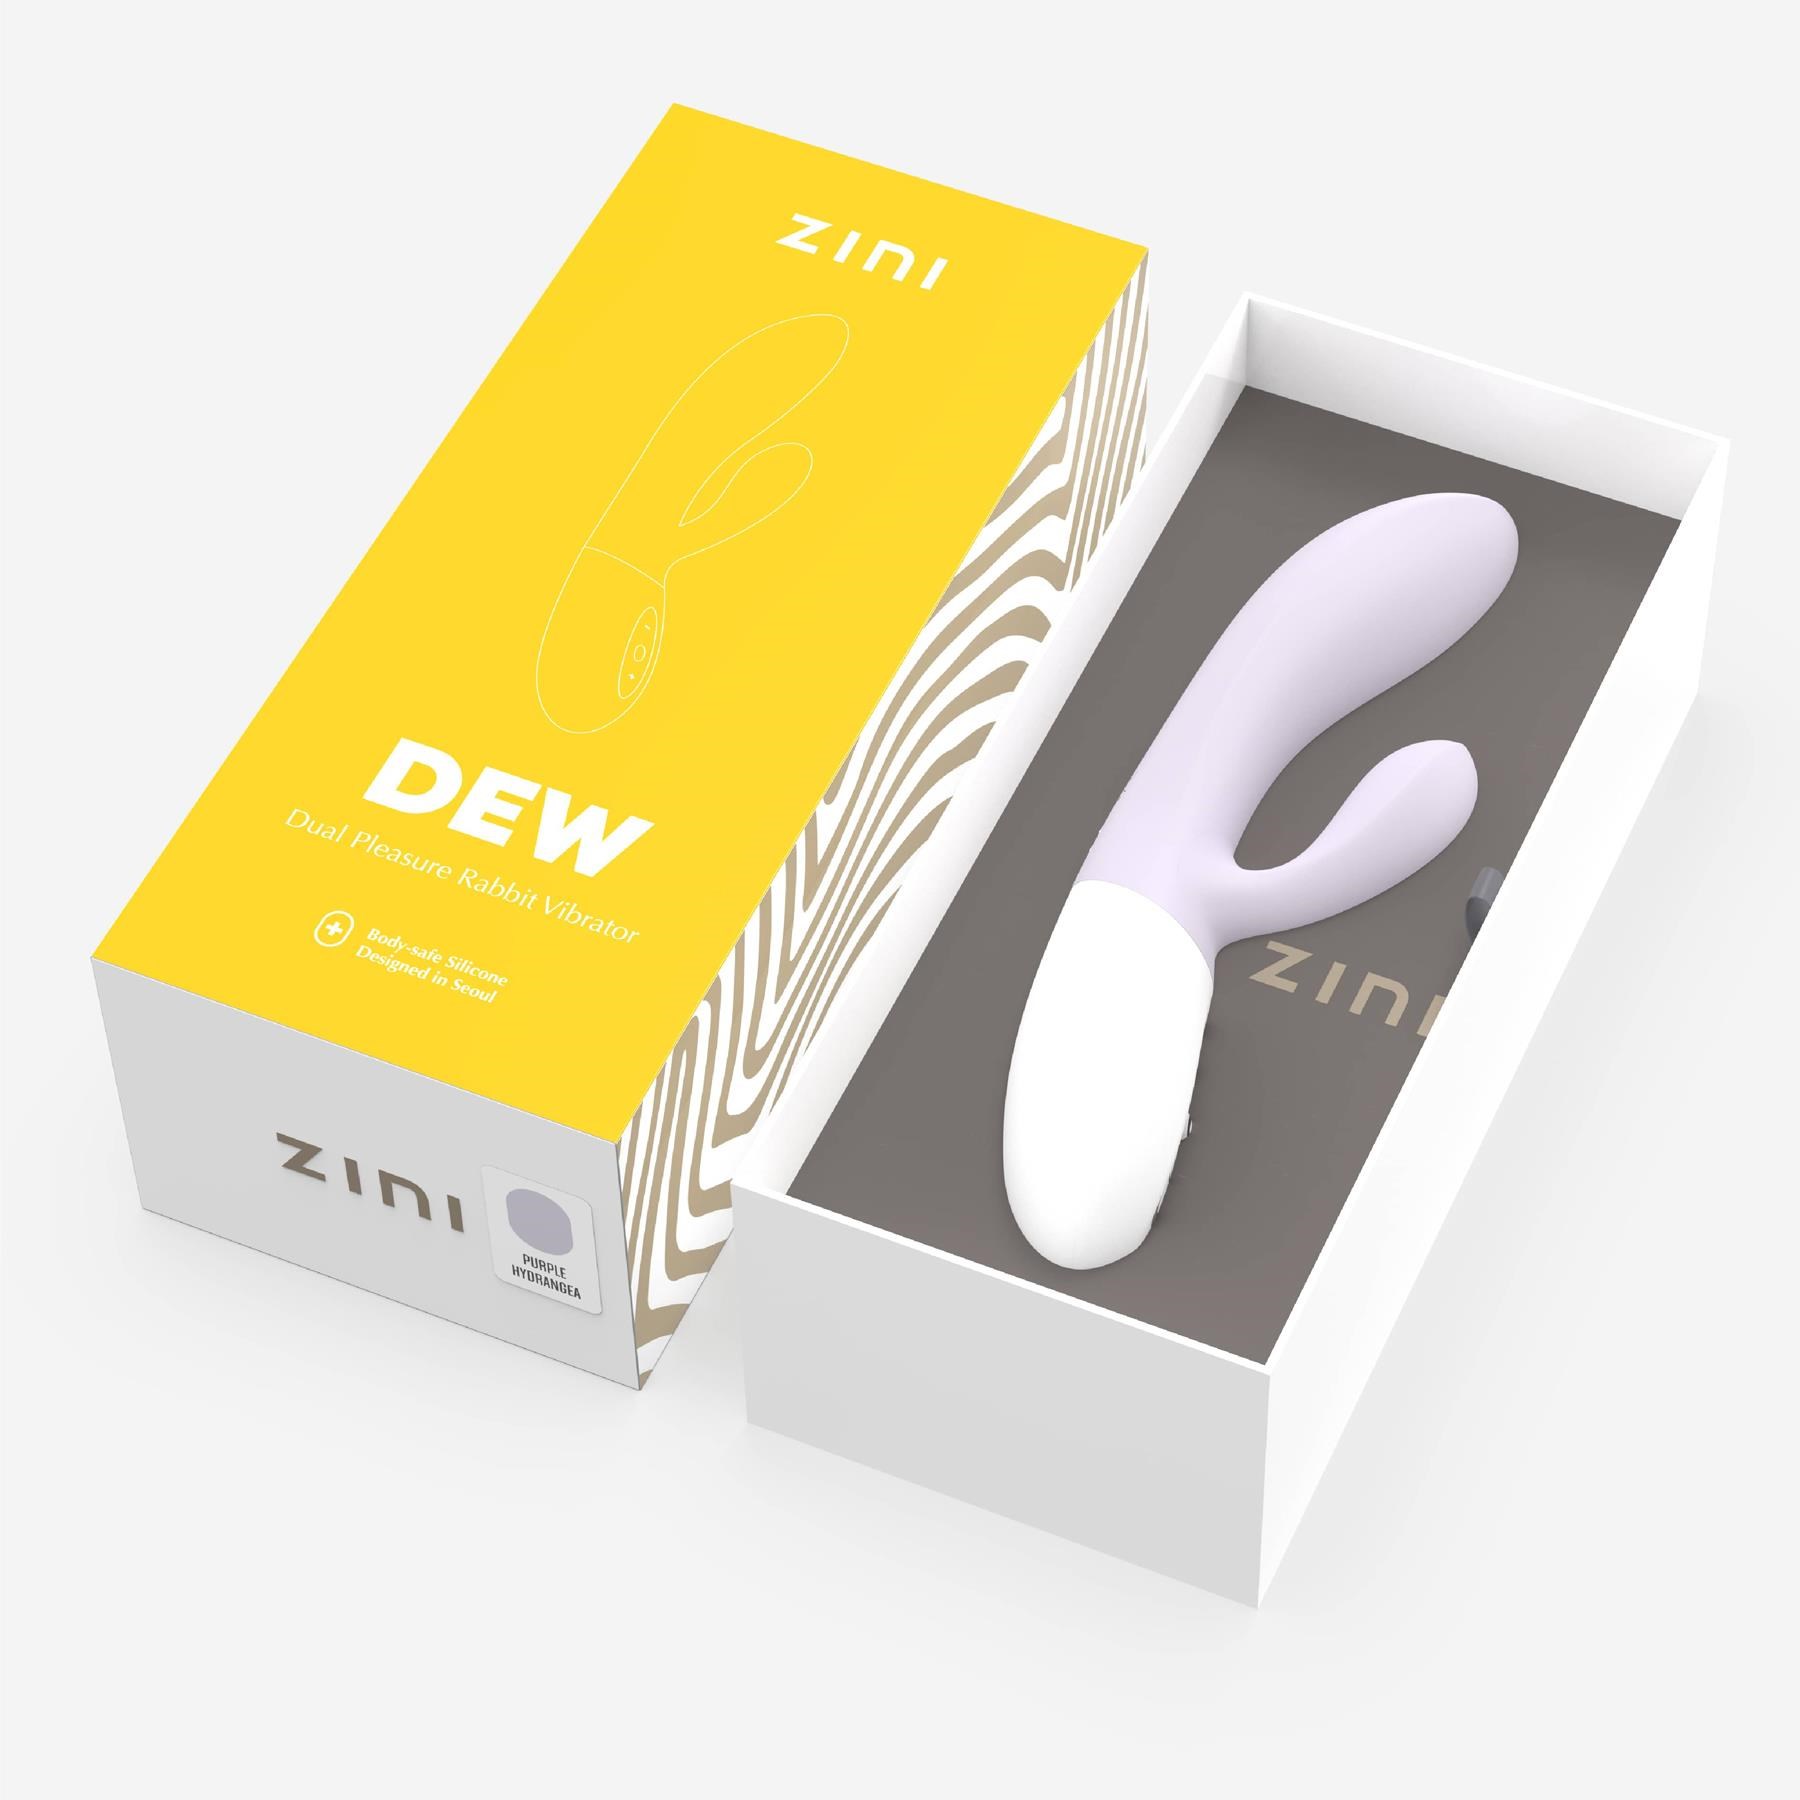 Zini Dew Dual Pleasure Rabbit - Open Packaging - Showing Product